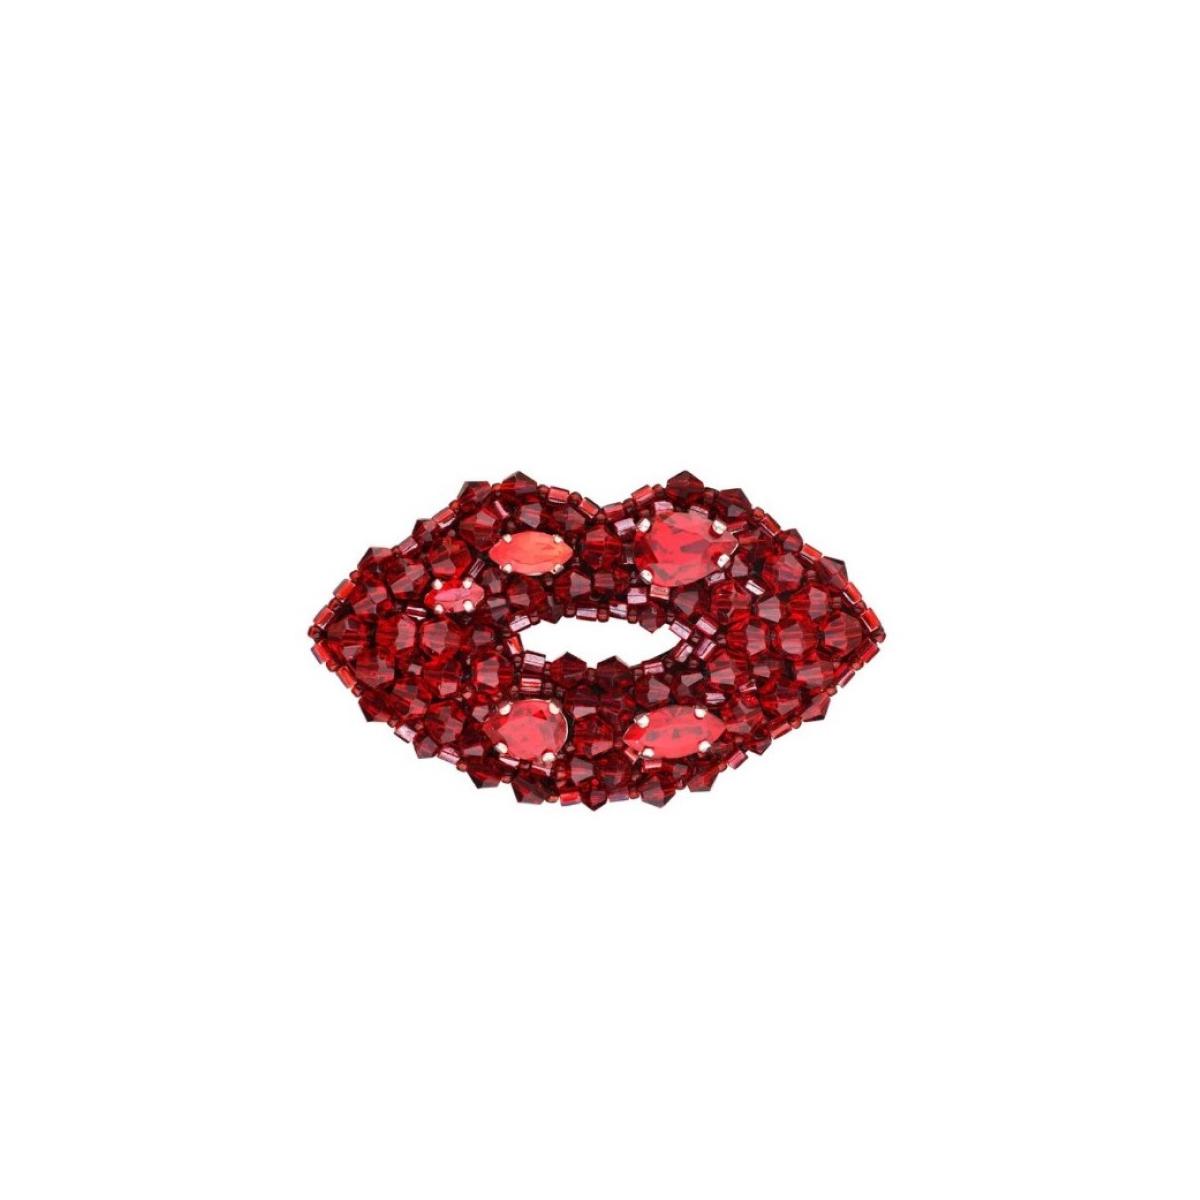 Брошь, расшитая кристаллами, Lips Phenomenal Studio, 7920 руб. (Poison Drop)